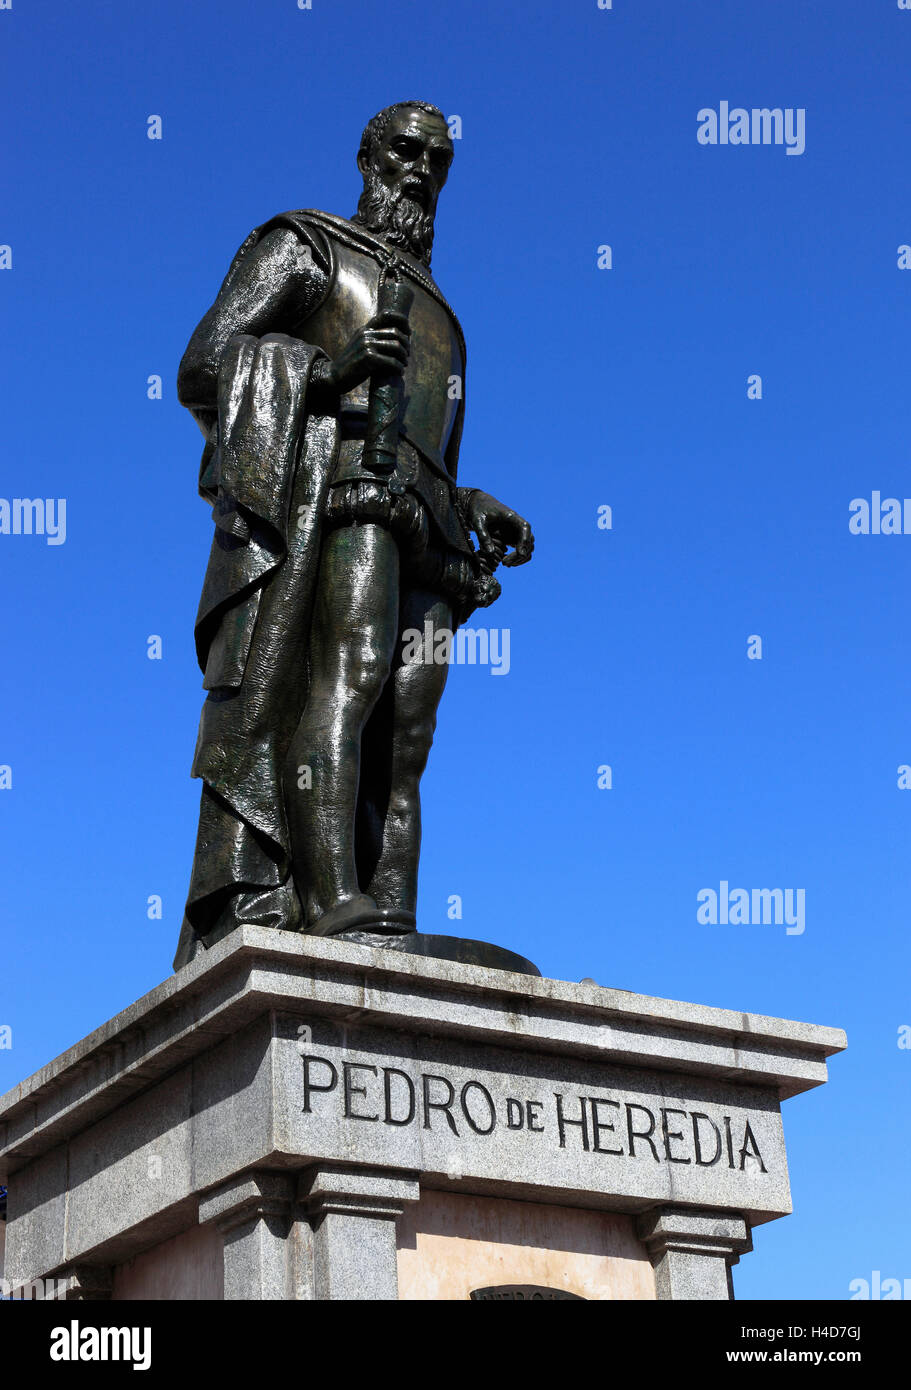 Republic Colombia, Departamento Bolivar, city Cartagena de Indias, statue the Perdo de Heredia, Camellon de off martires Stock Photo